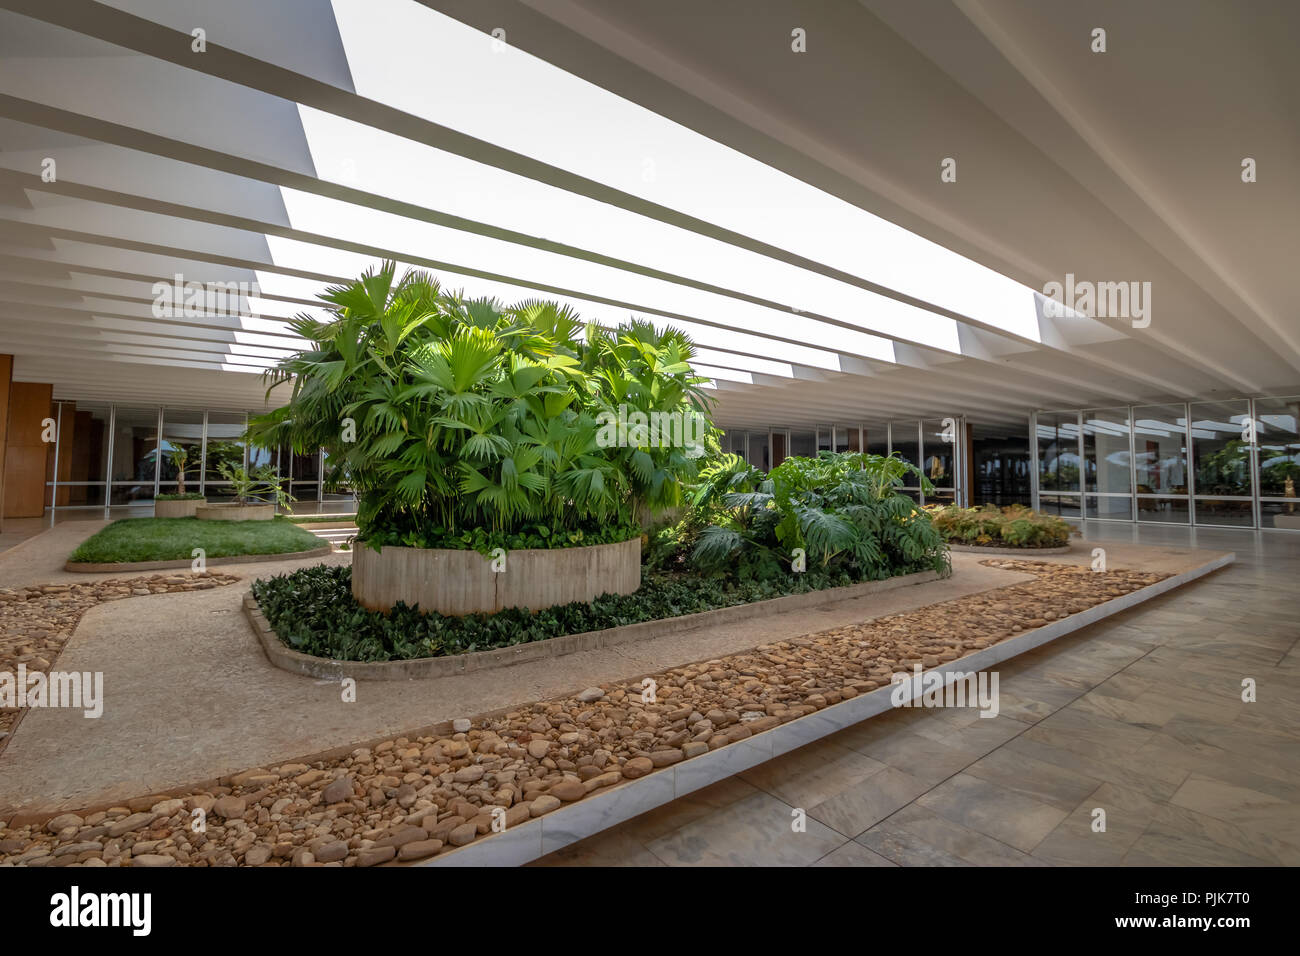 Terrace Gardens of Itamaraty Palace - Brasilia, Distrito Federal, Brazil Stock Photo